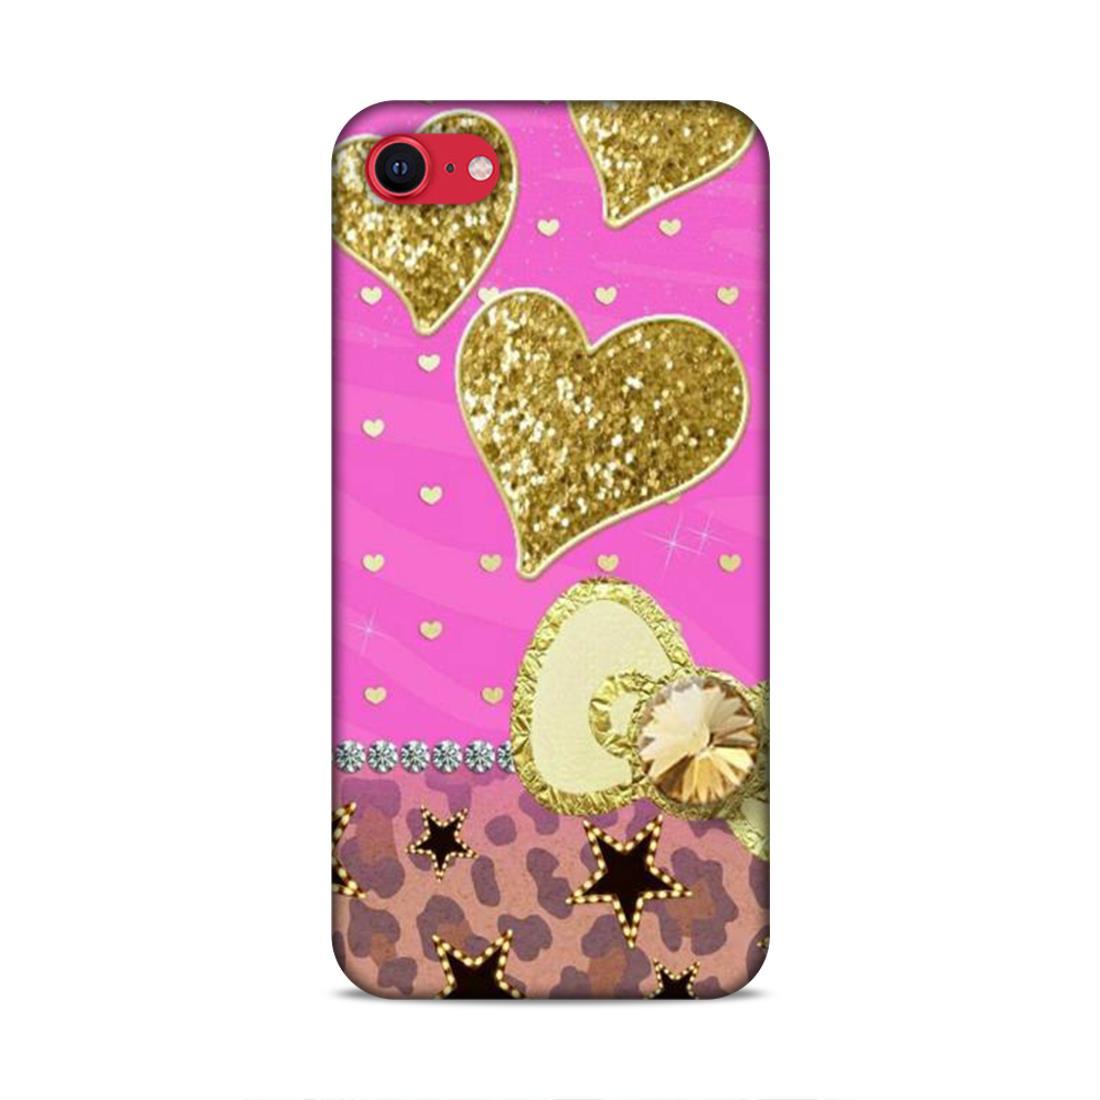 Cute Pink Heart iPhone SE 2020 Phone Case Cover